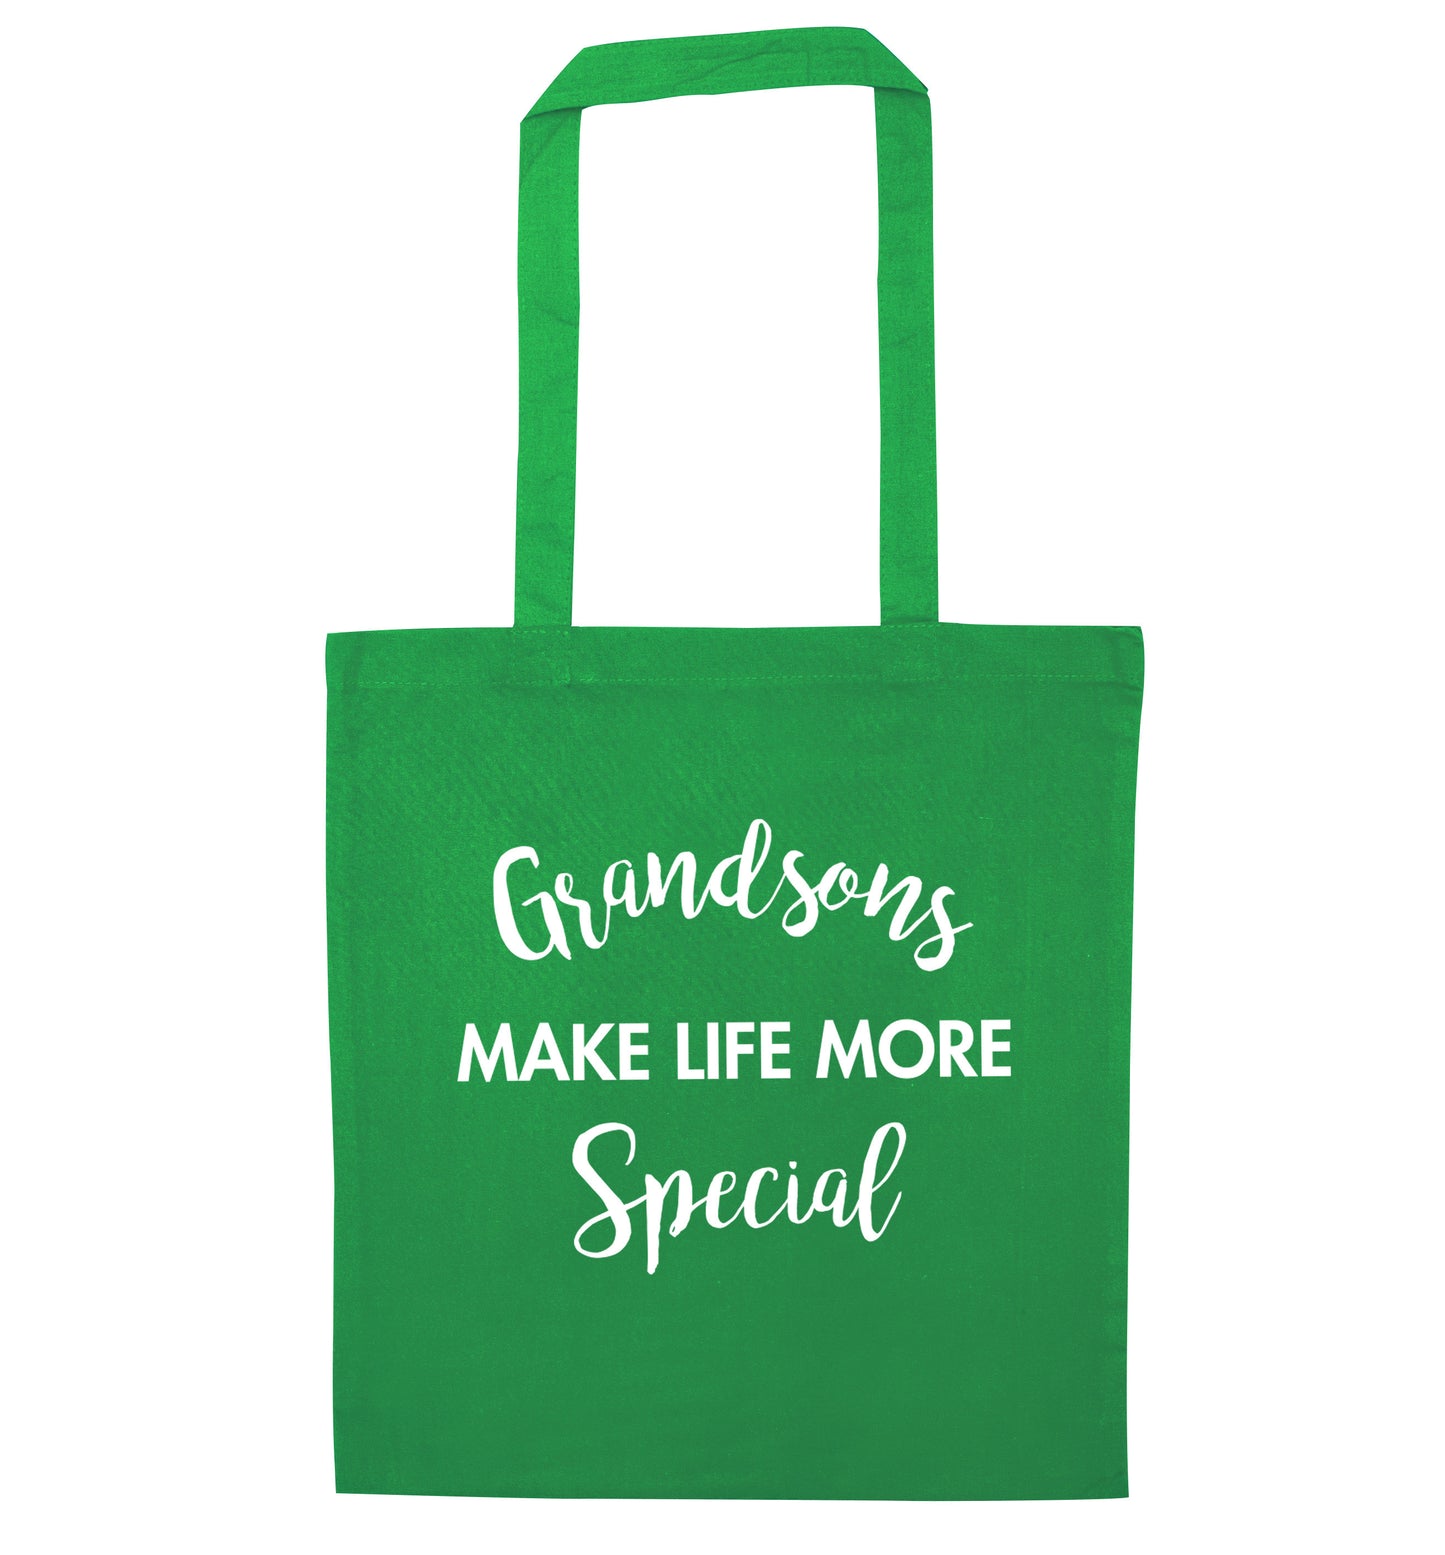 Grandsons make life more special green tote bag